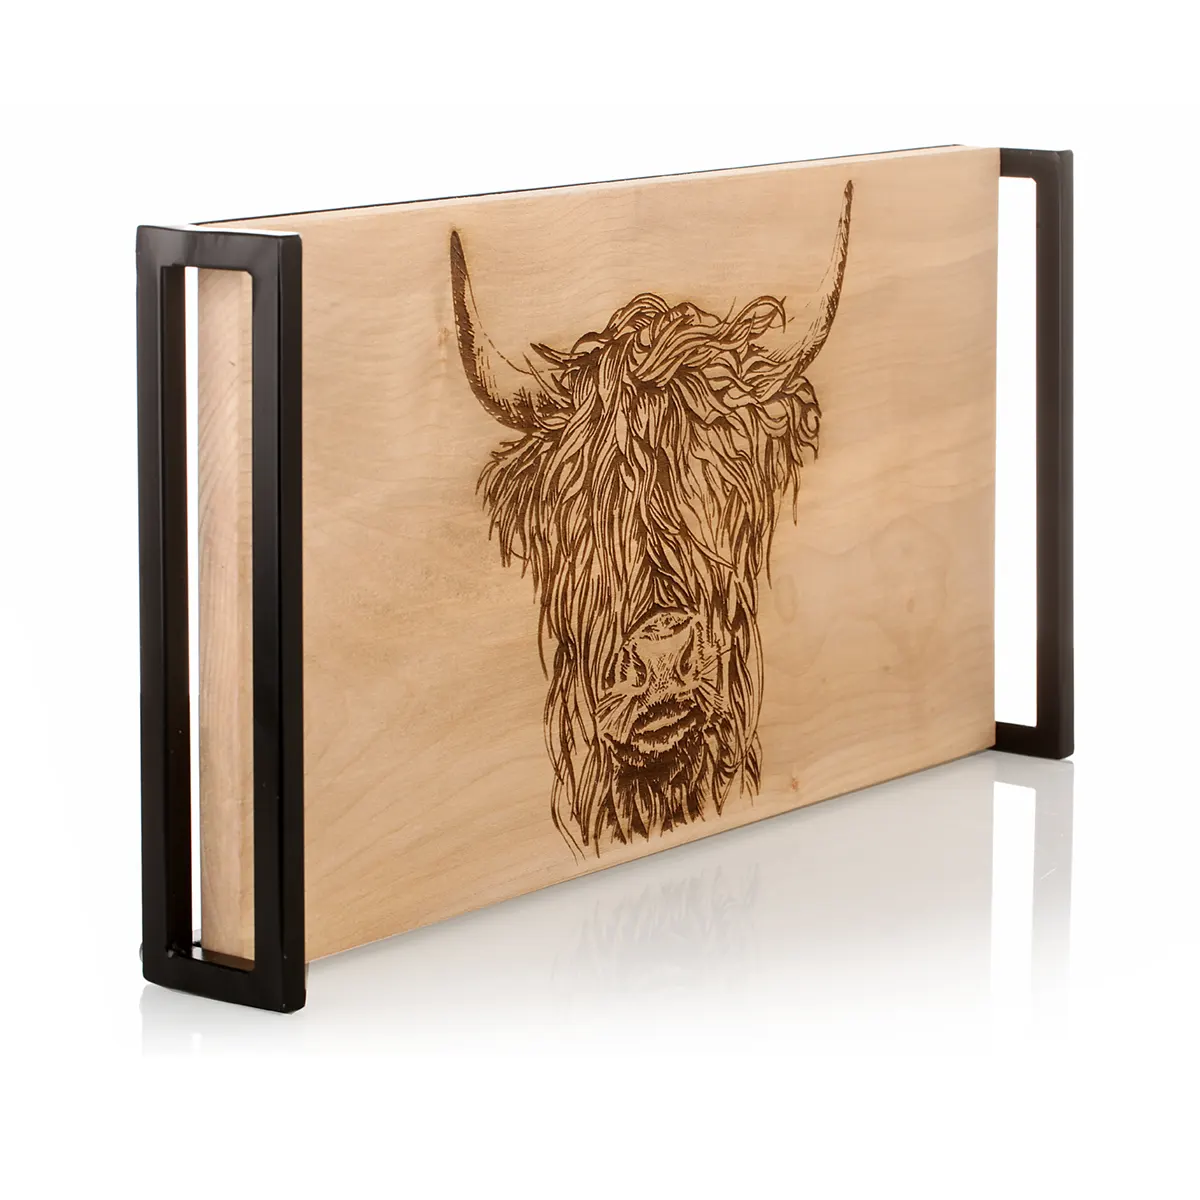 Highland Cow - Holz Tablett / Servierbrett aus Bergahorn & Metall - Made in Scotland